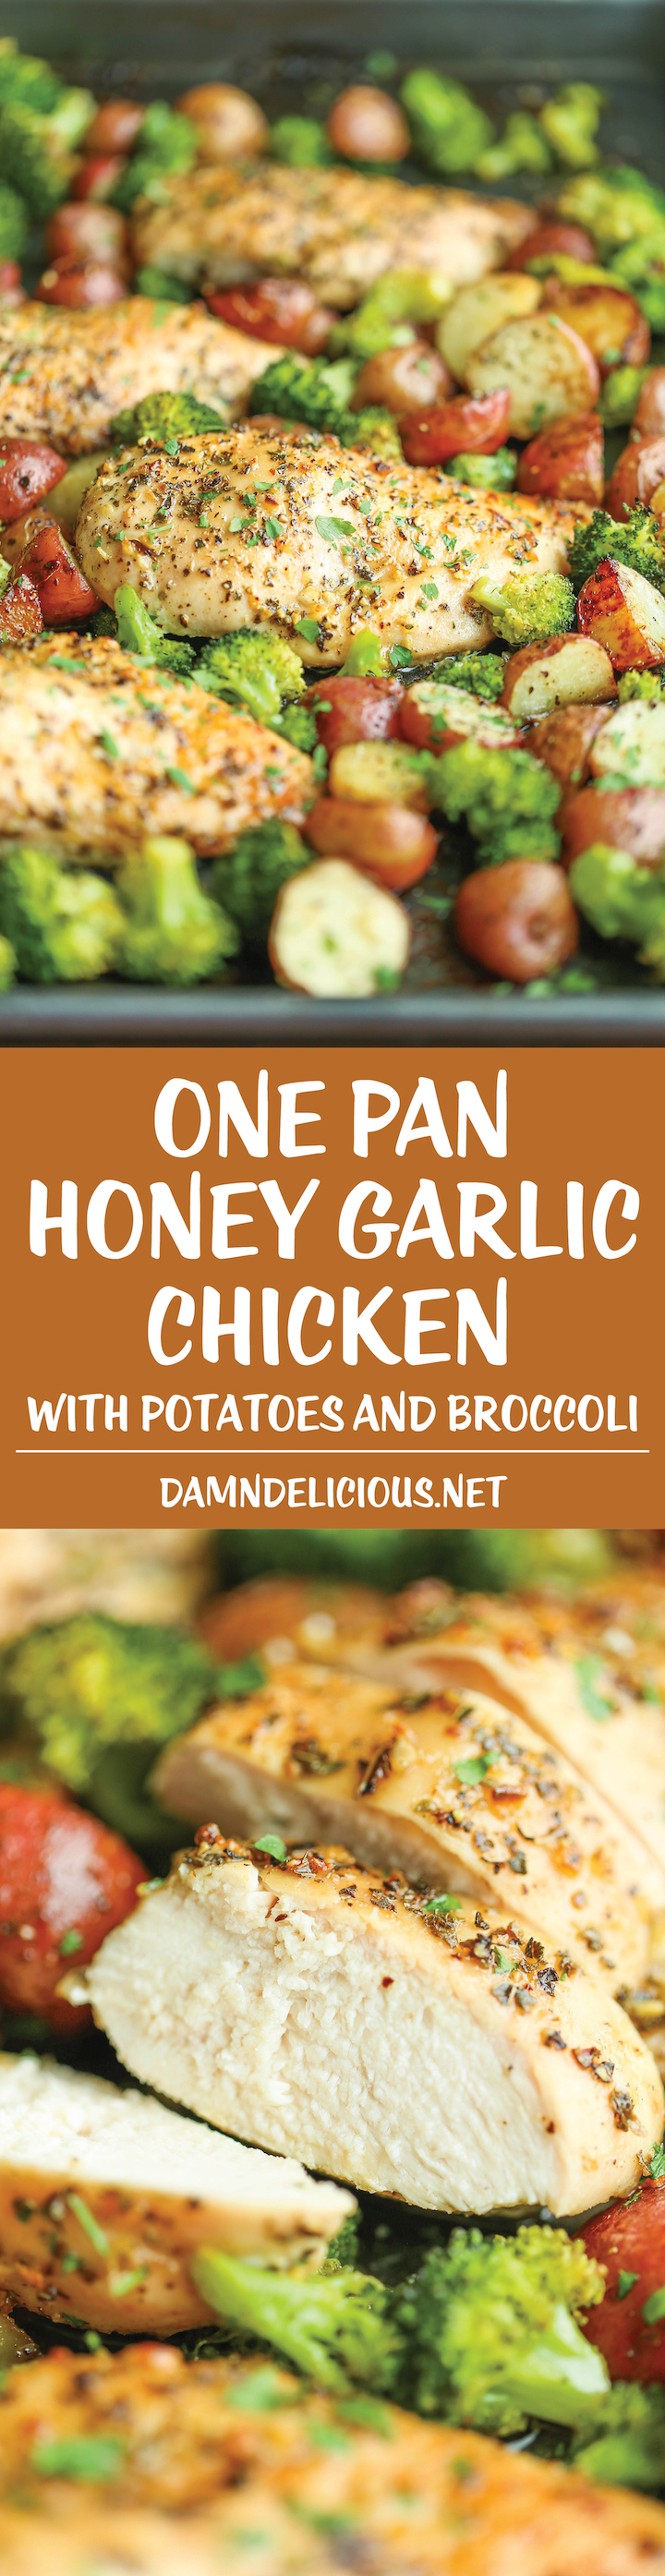 Pan Fried Honey Garlic Chicken Spice The Plate